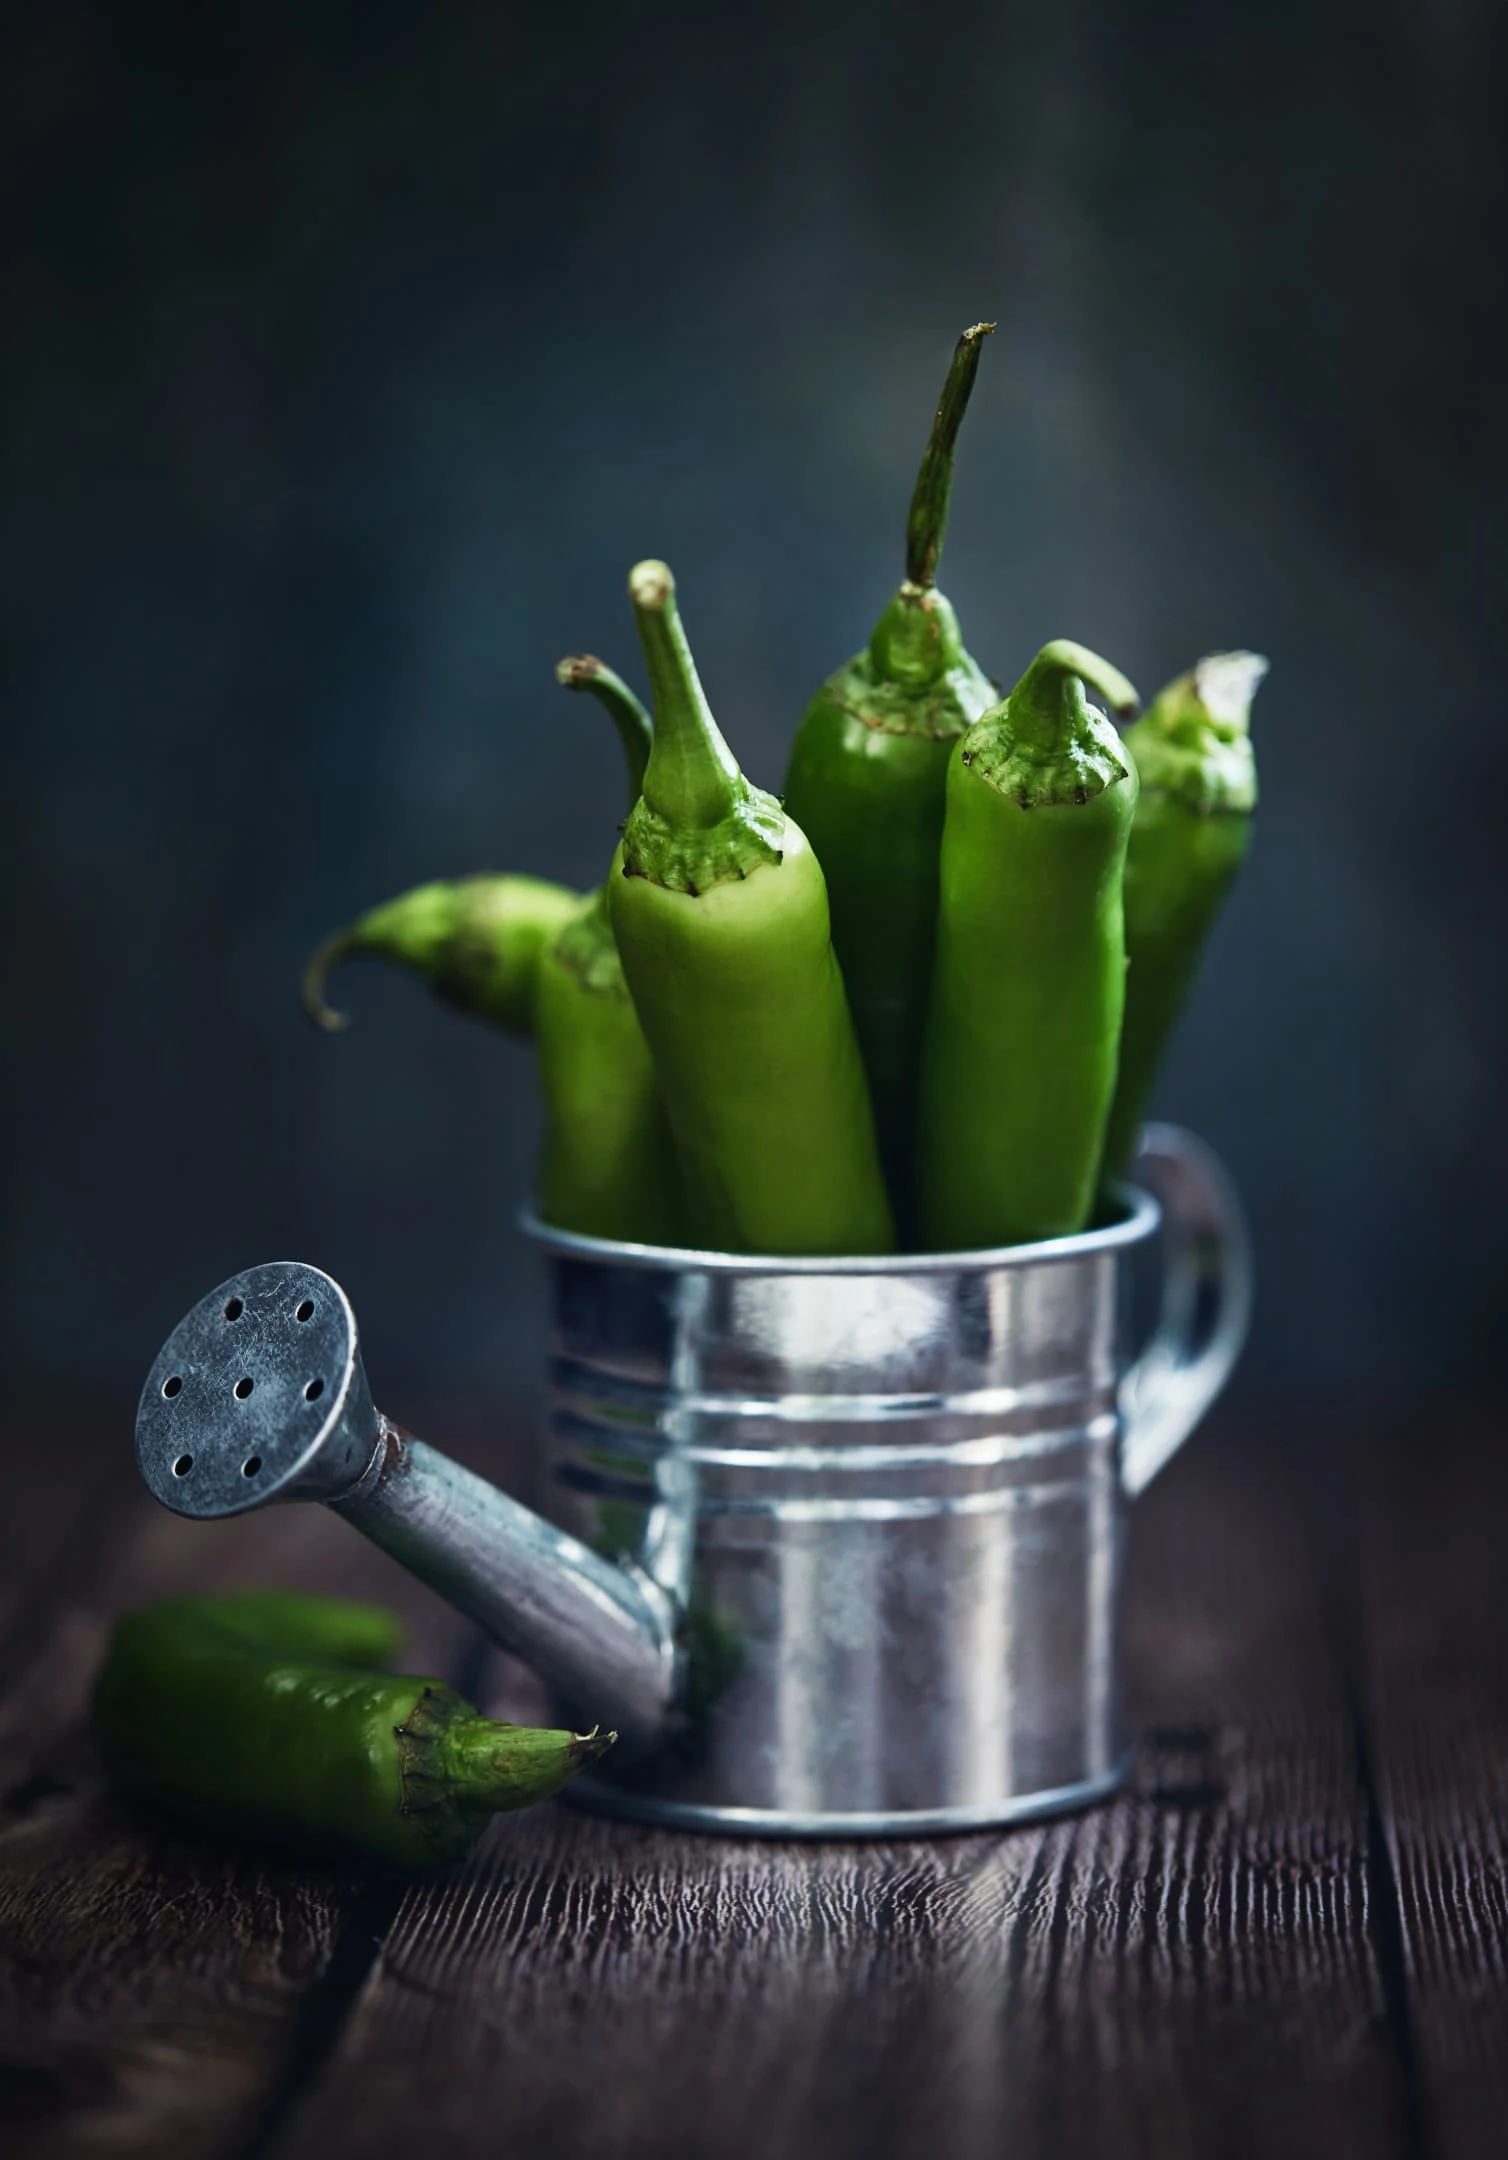 Green hot serrano peppers